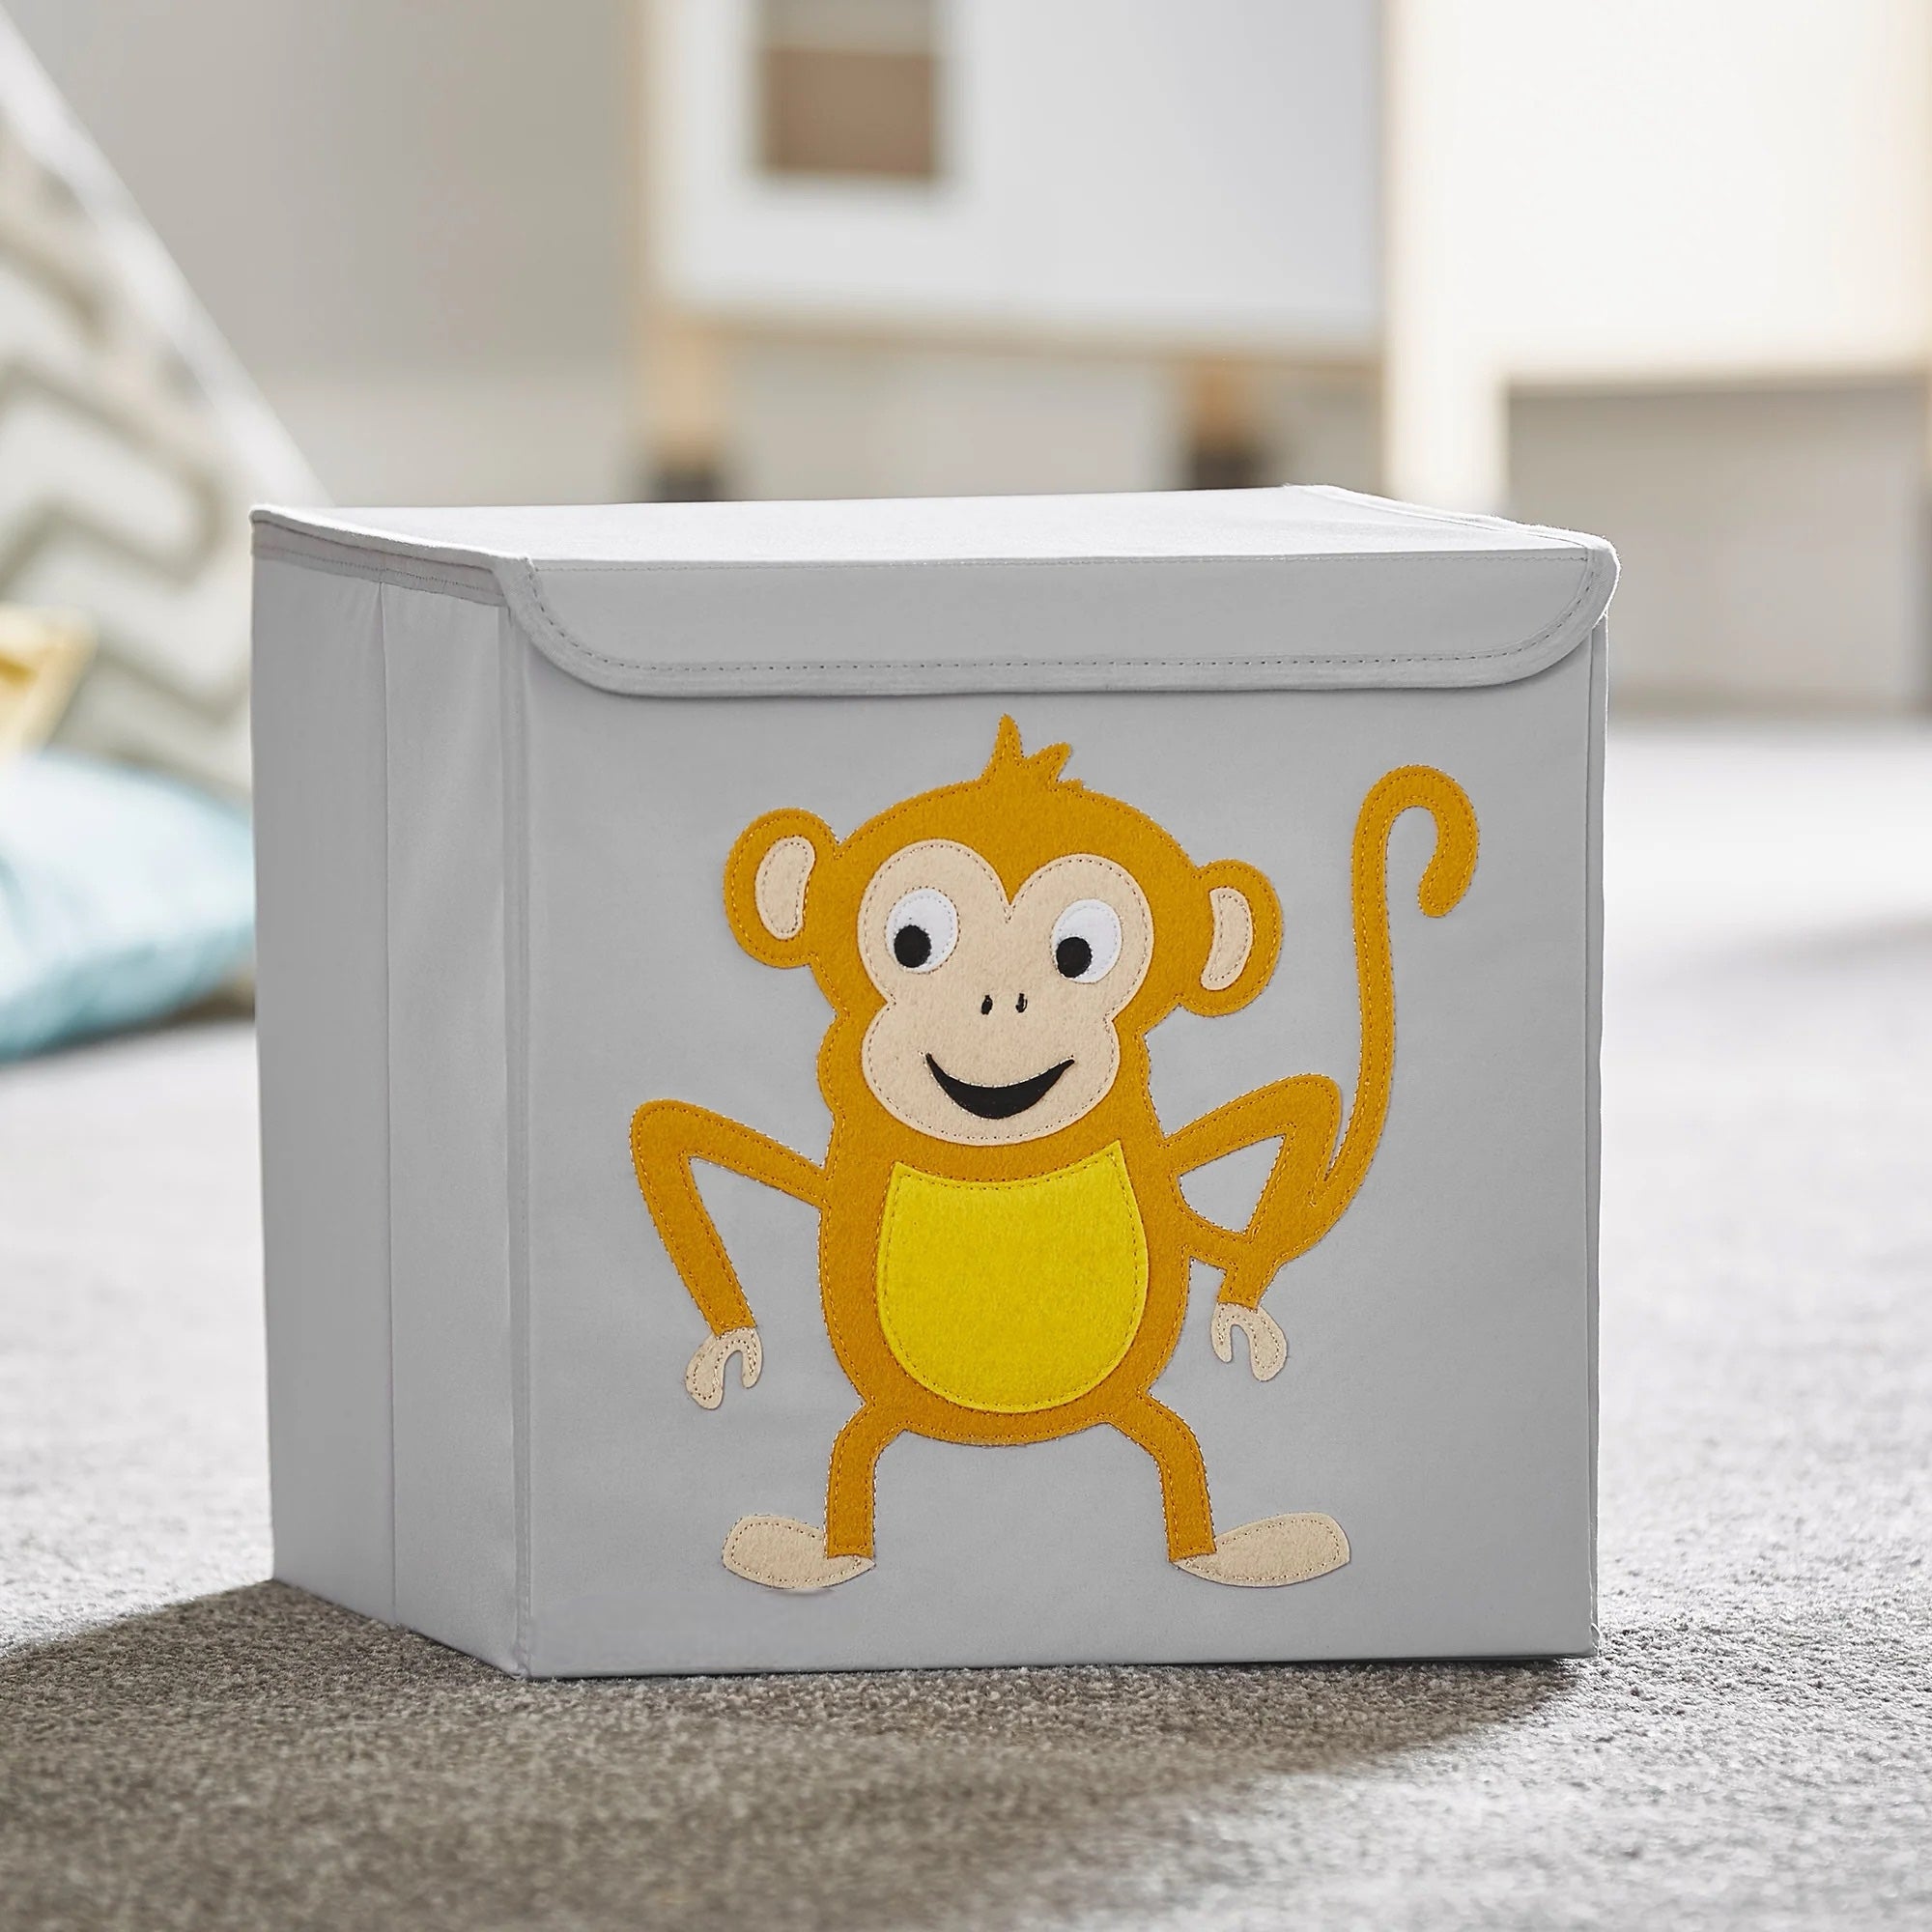 Personalized Storage Box - Monkey